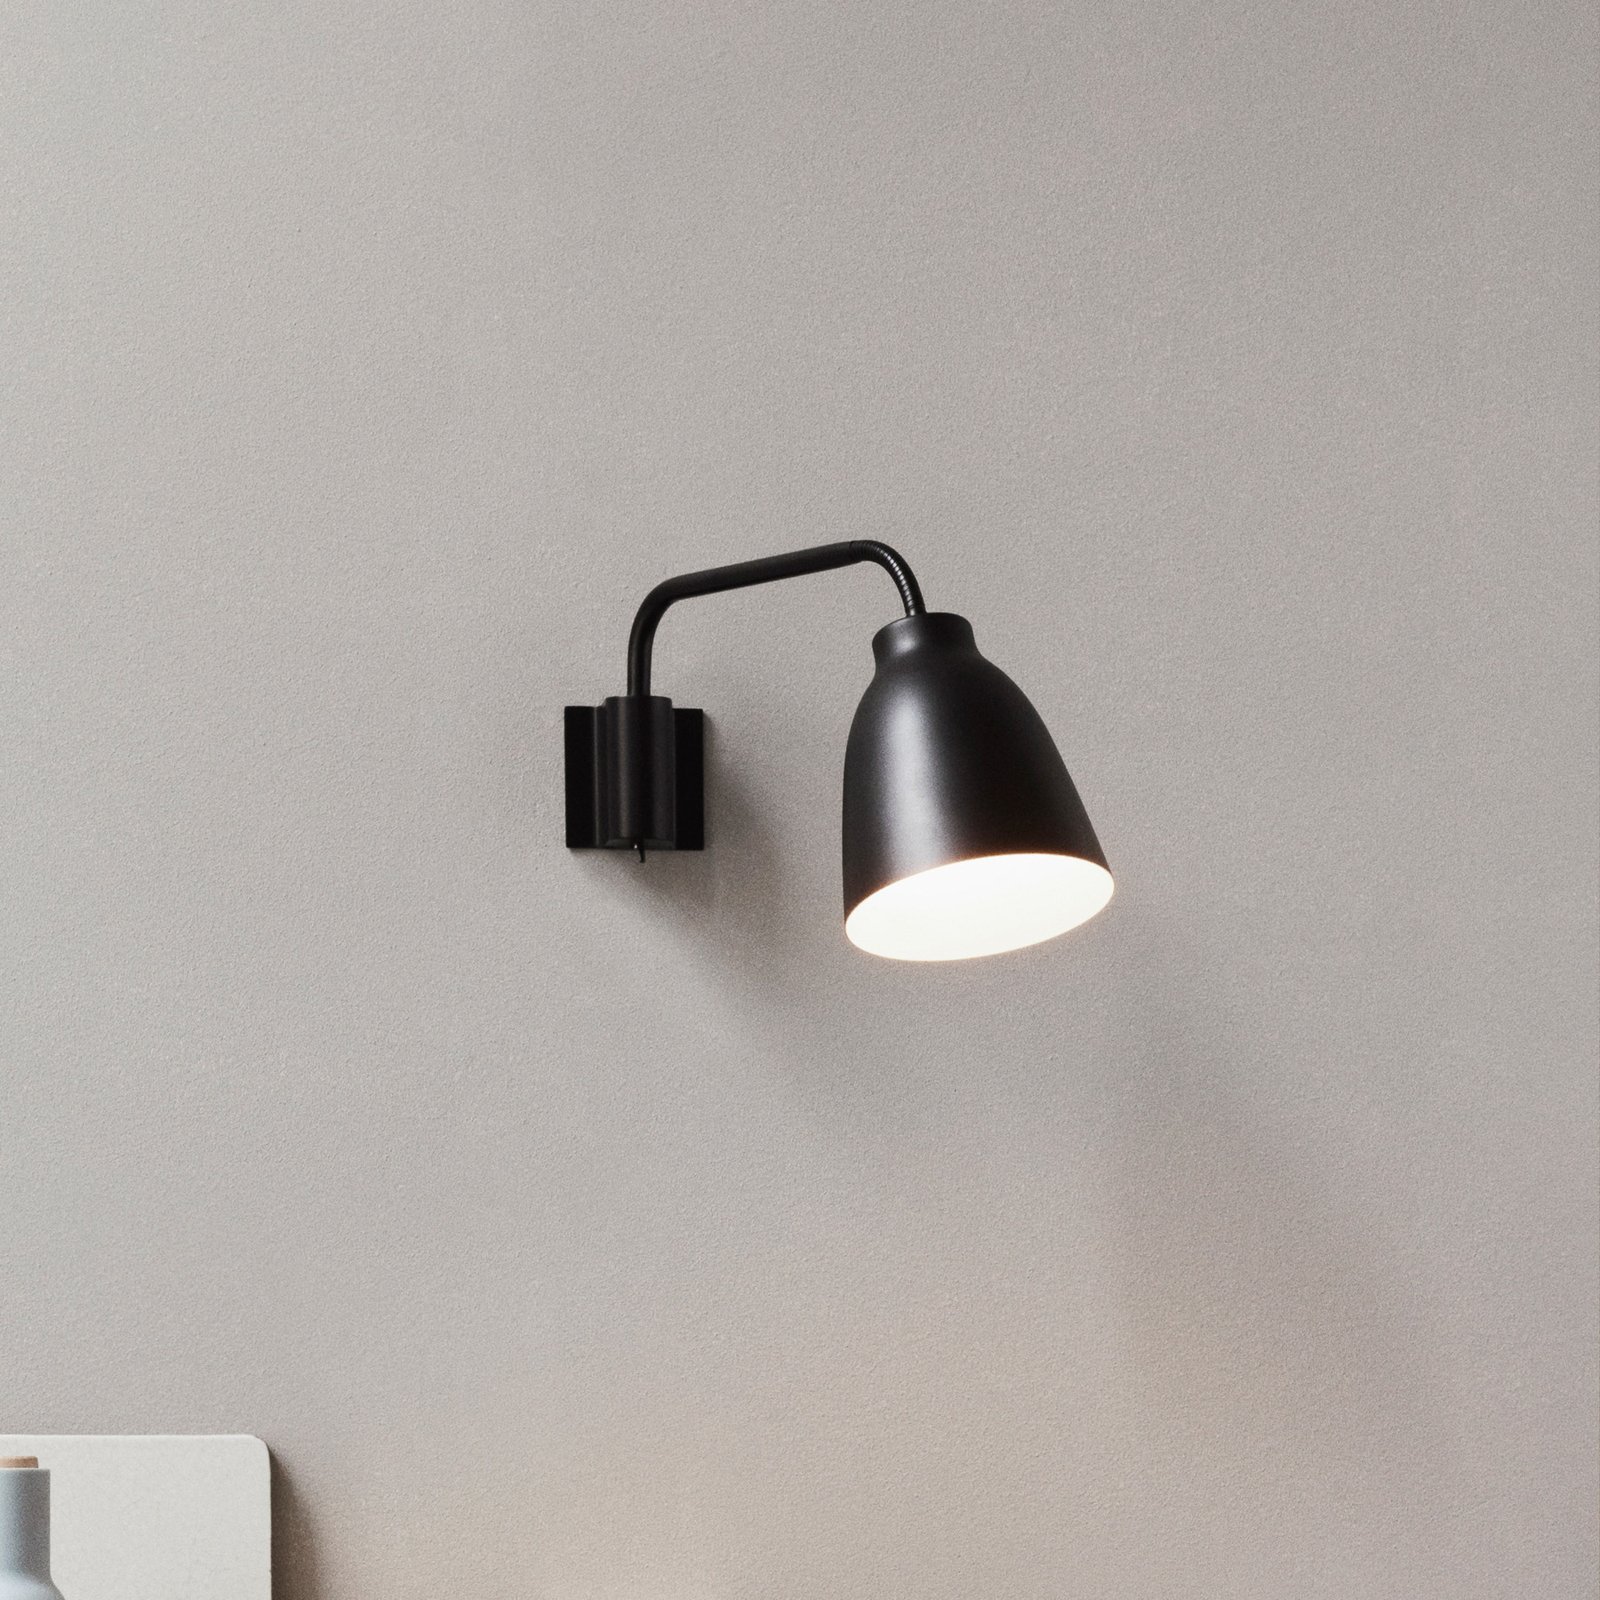 FRITZ HANSEN Caravaggio wall lamp, black